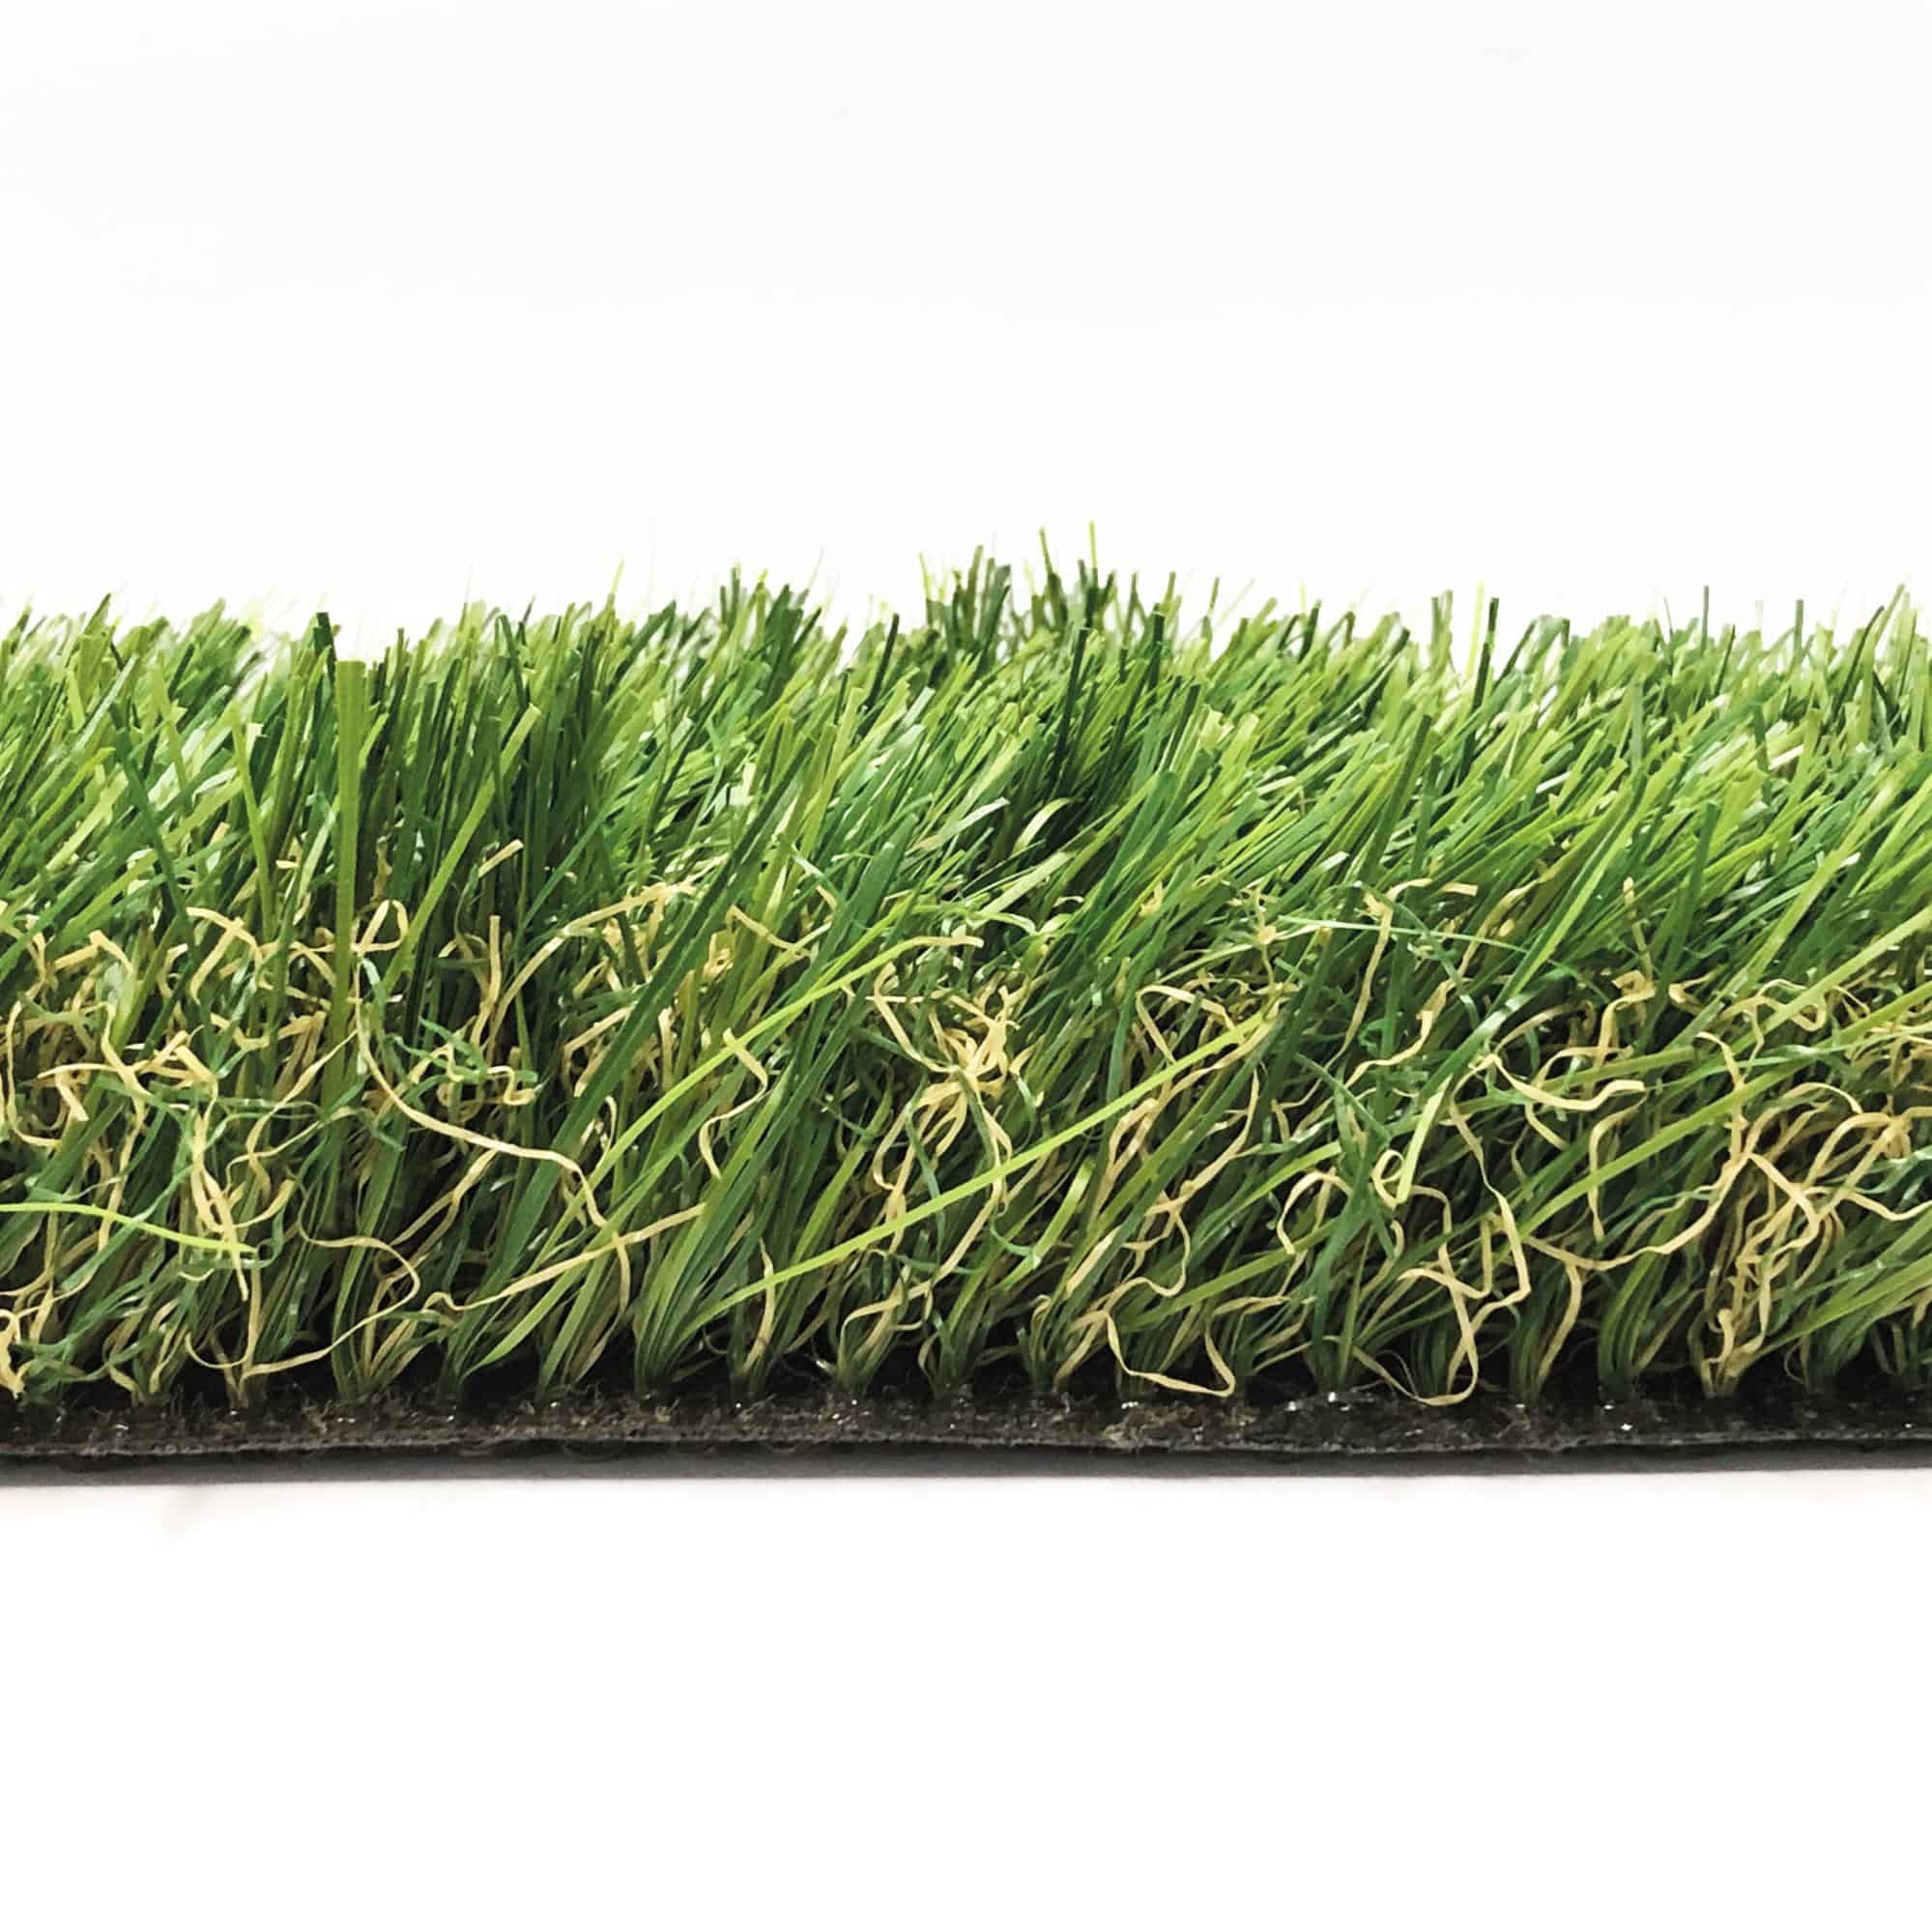 CORE Lawn Natural Artificial Grass 4m Wide Roll 16 m